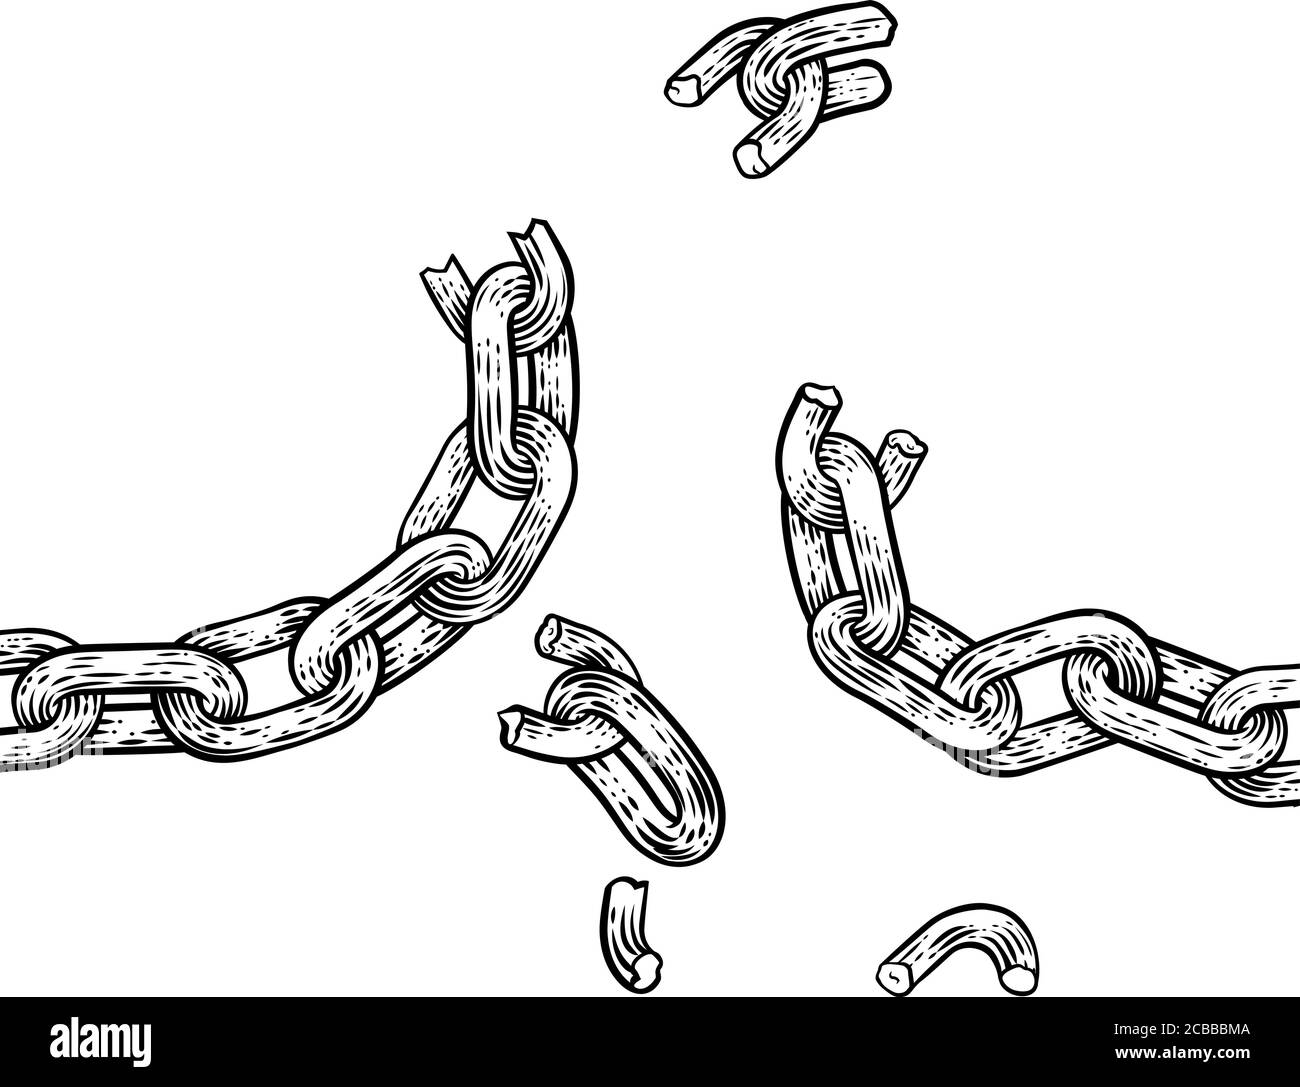 Chain Breaking Freedom Concept Illustration Stock Vector